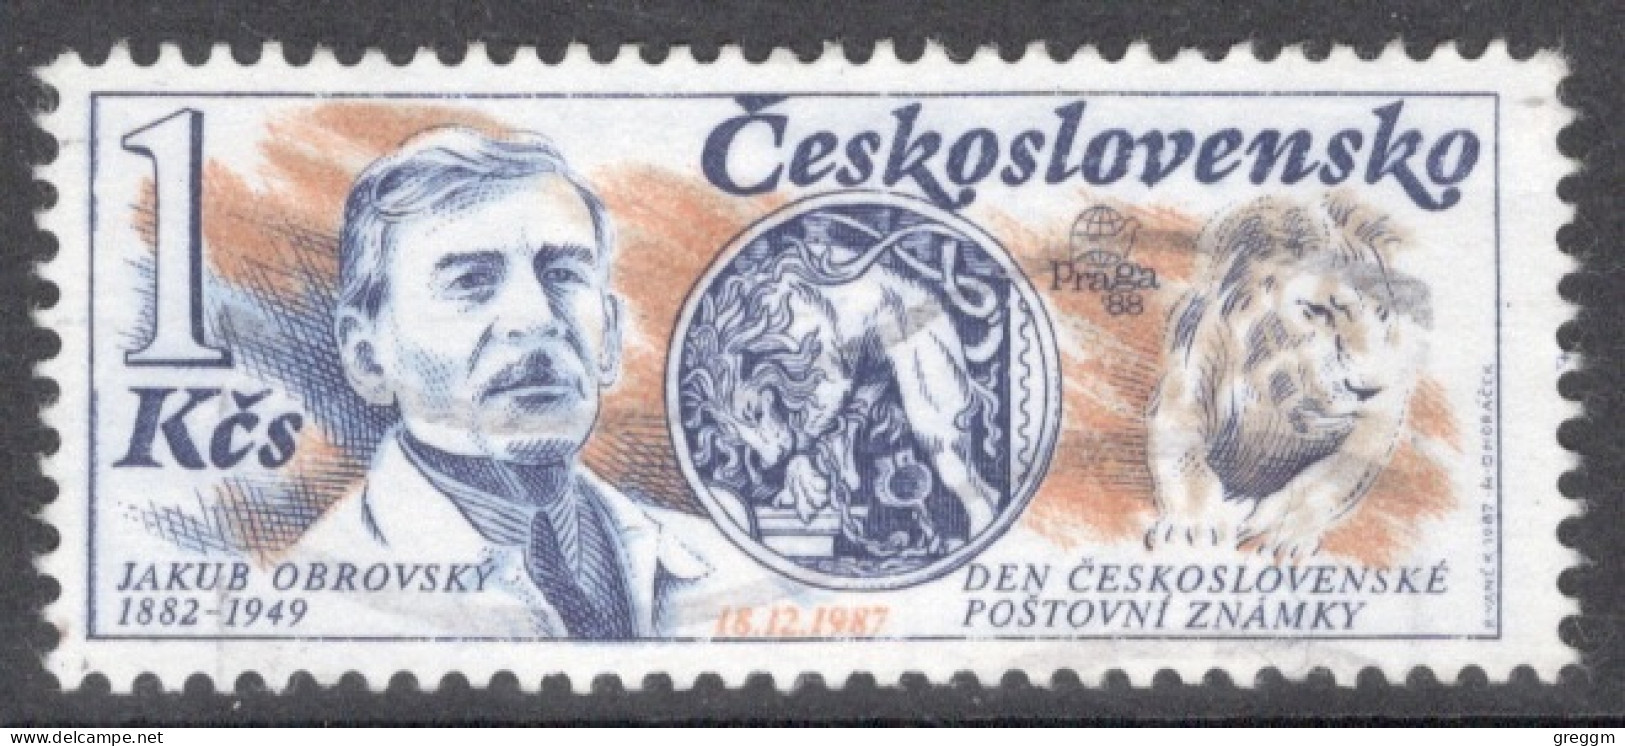 Czechoslovakia 1987 Single Stamp For The 105th Anniversary Of The Birth Of Jakub Obrovsky ,Stamp Designer In Fine Used - Usati